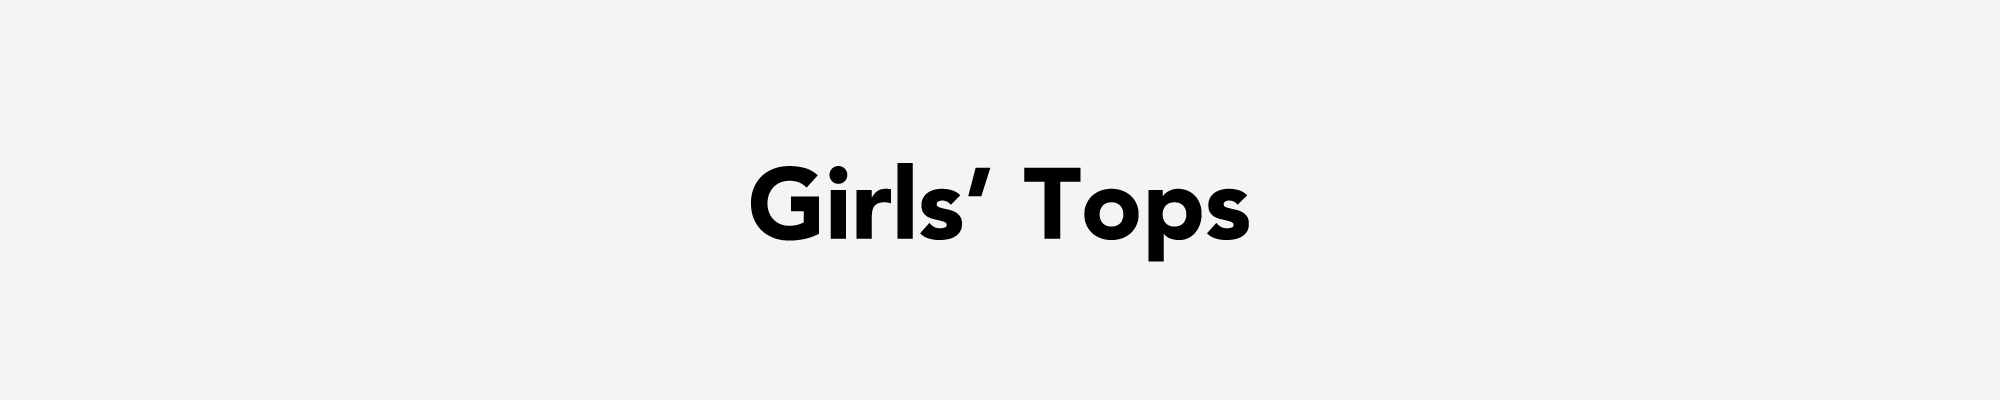 Girls' Tops